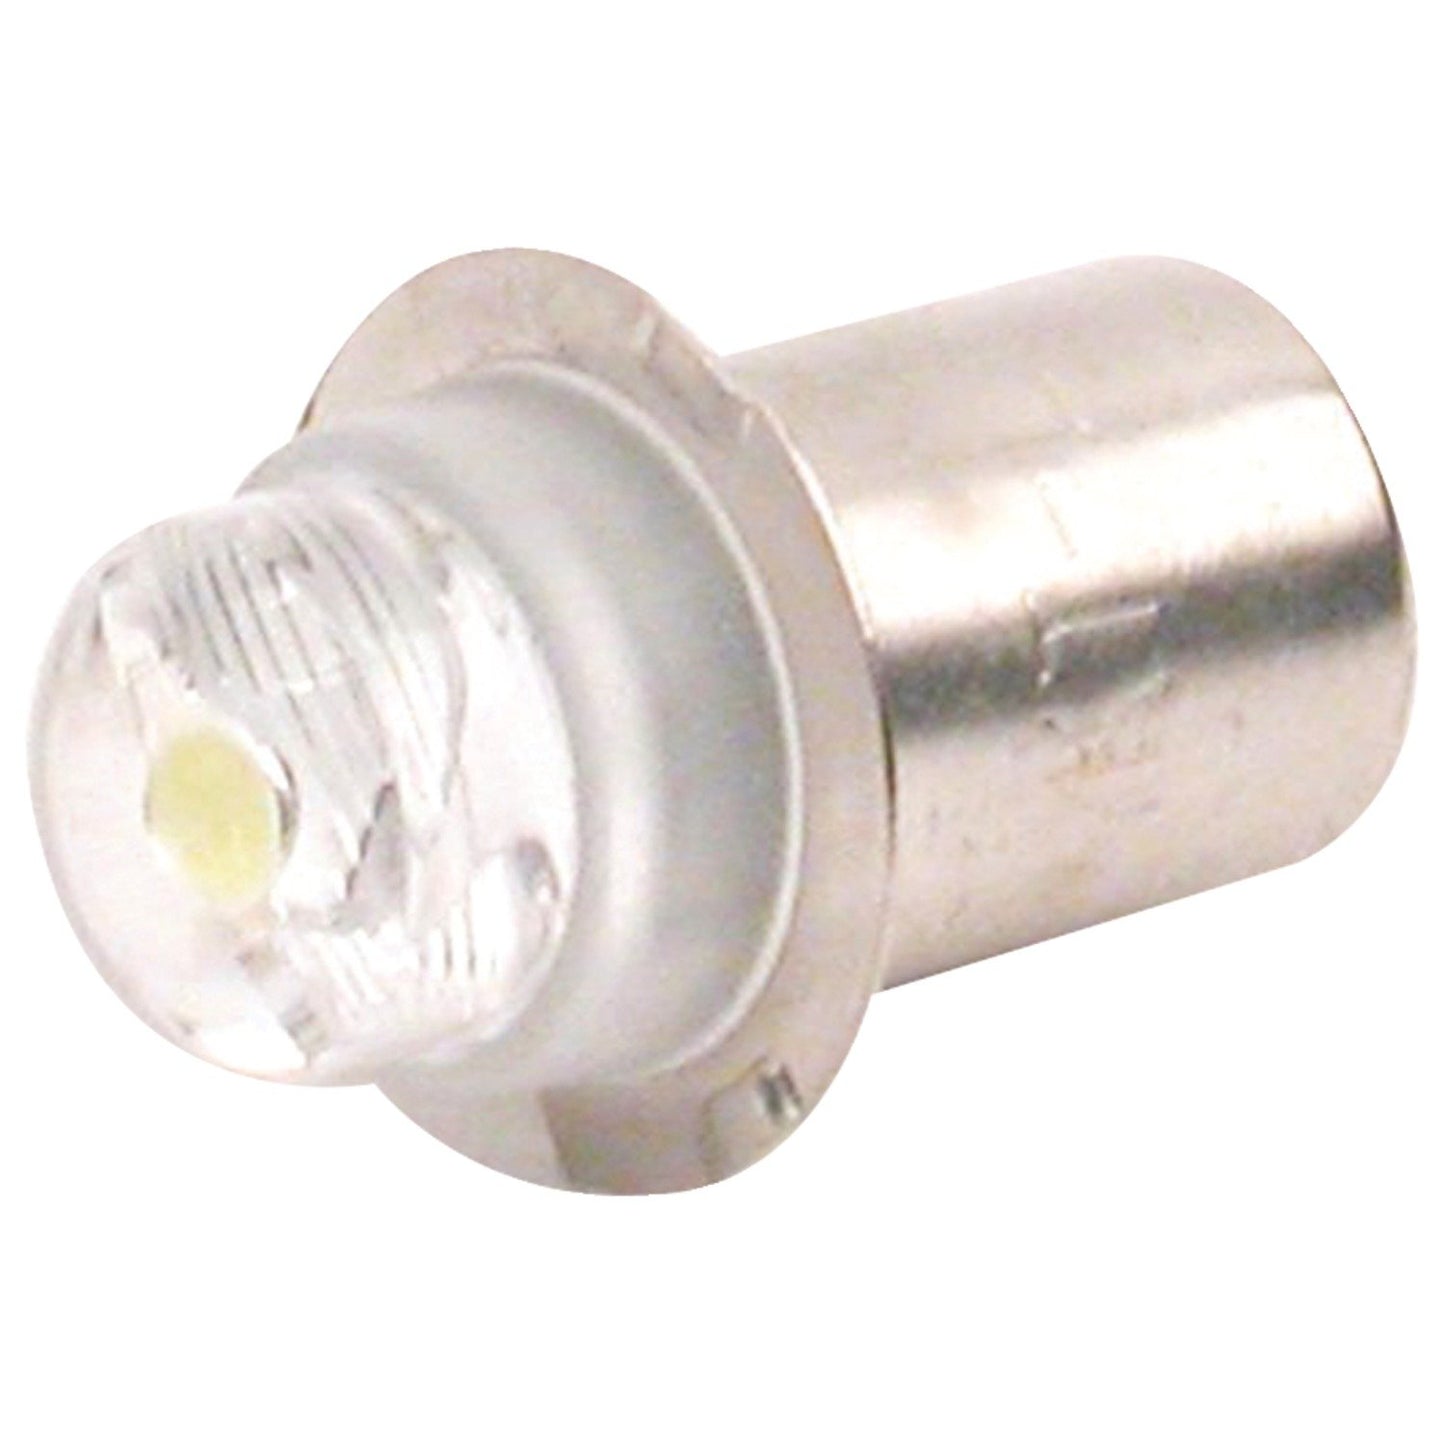 DORCY 41-1643 30 Lumen LED Replacement Bulb